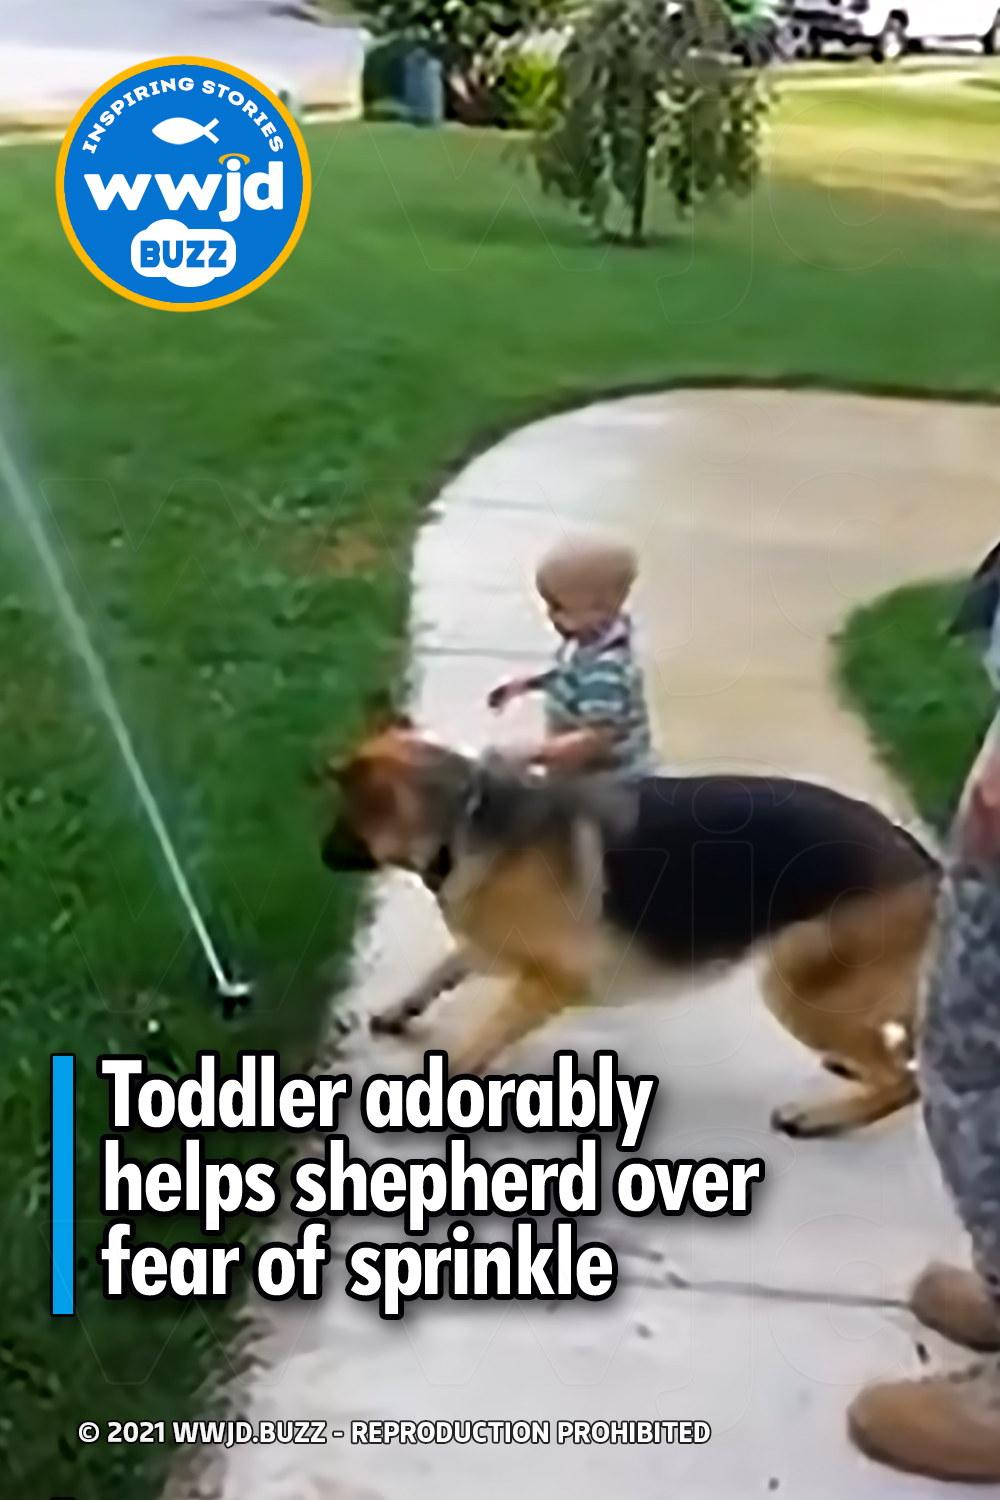 Toddler adorably helps shepherd over fear of sprinkle